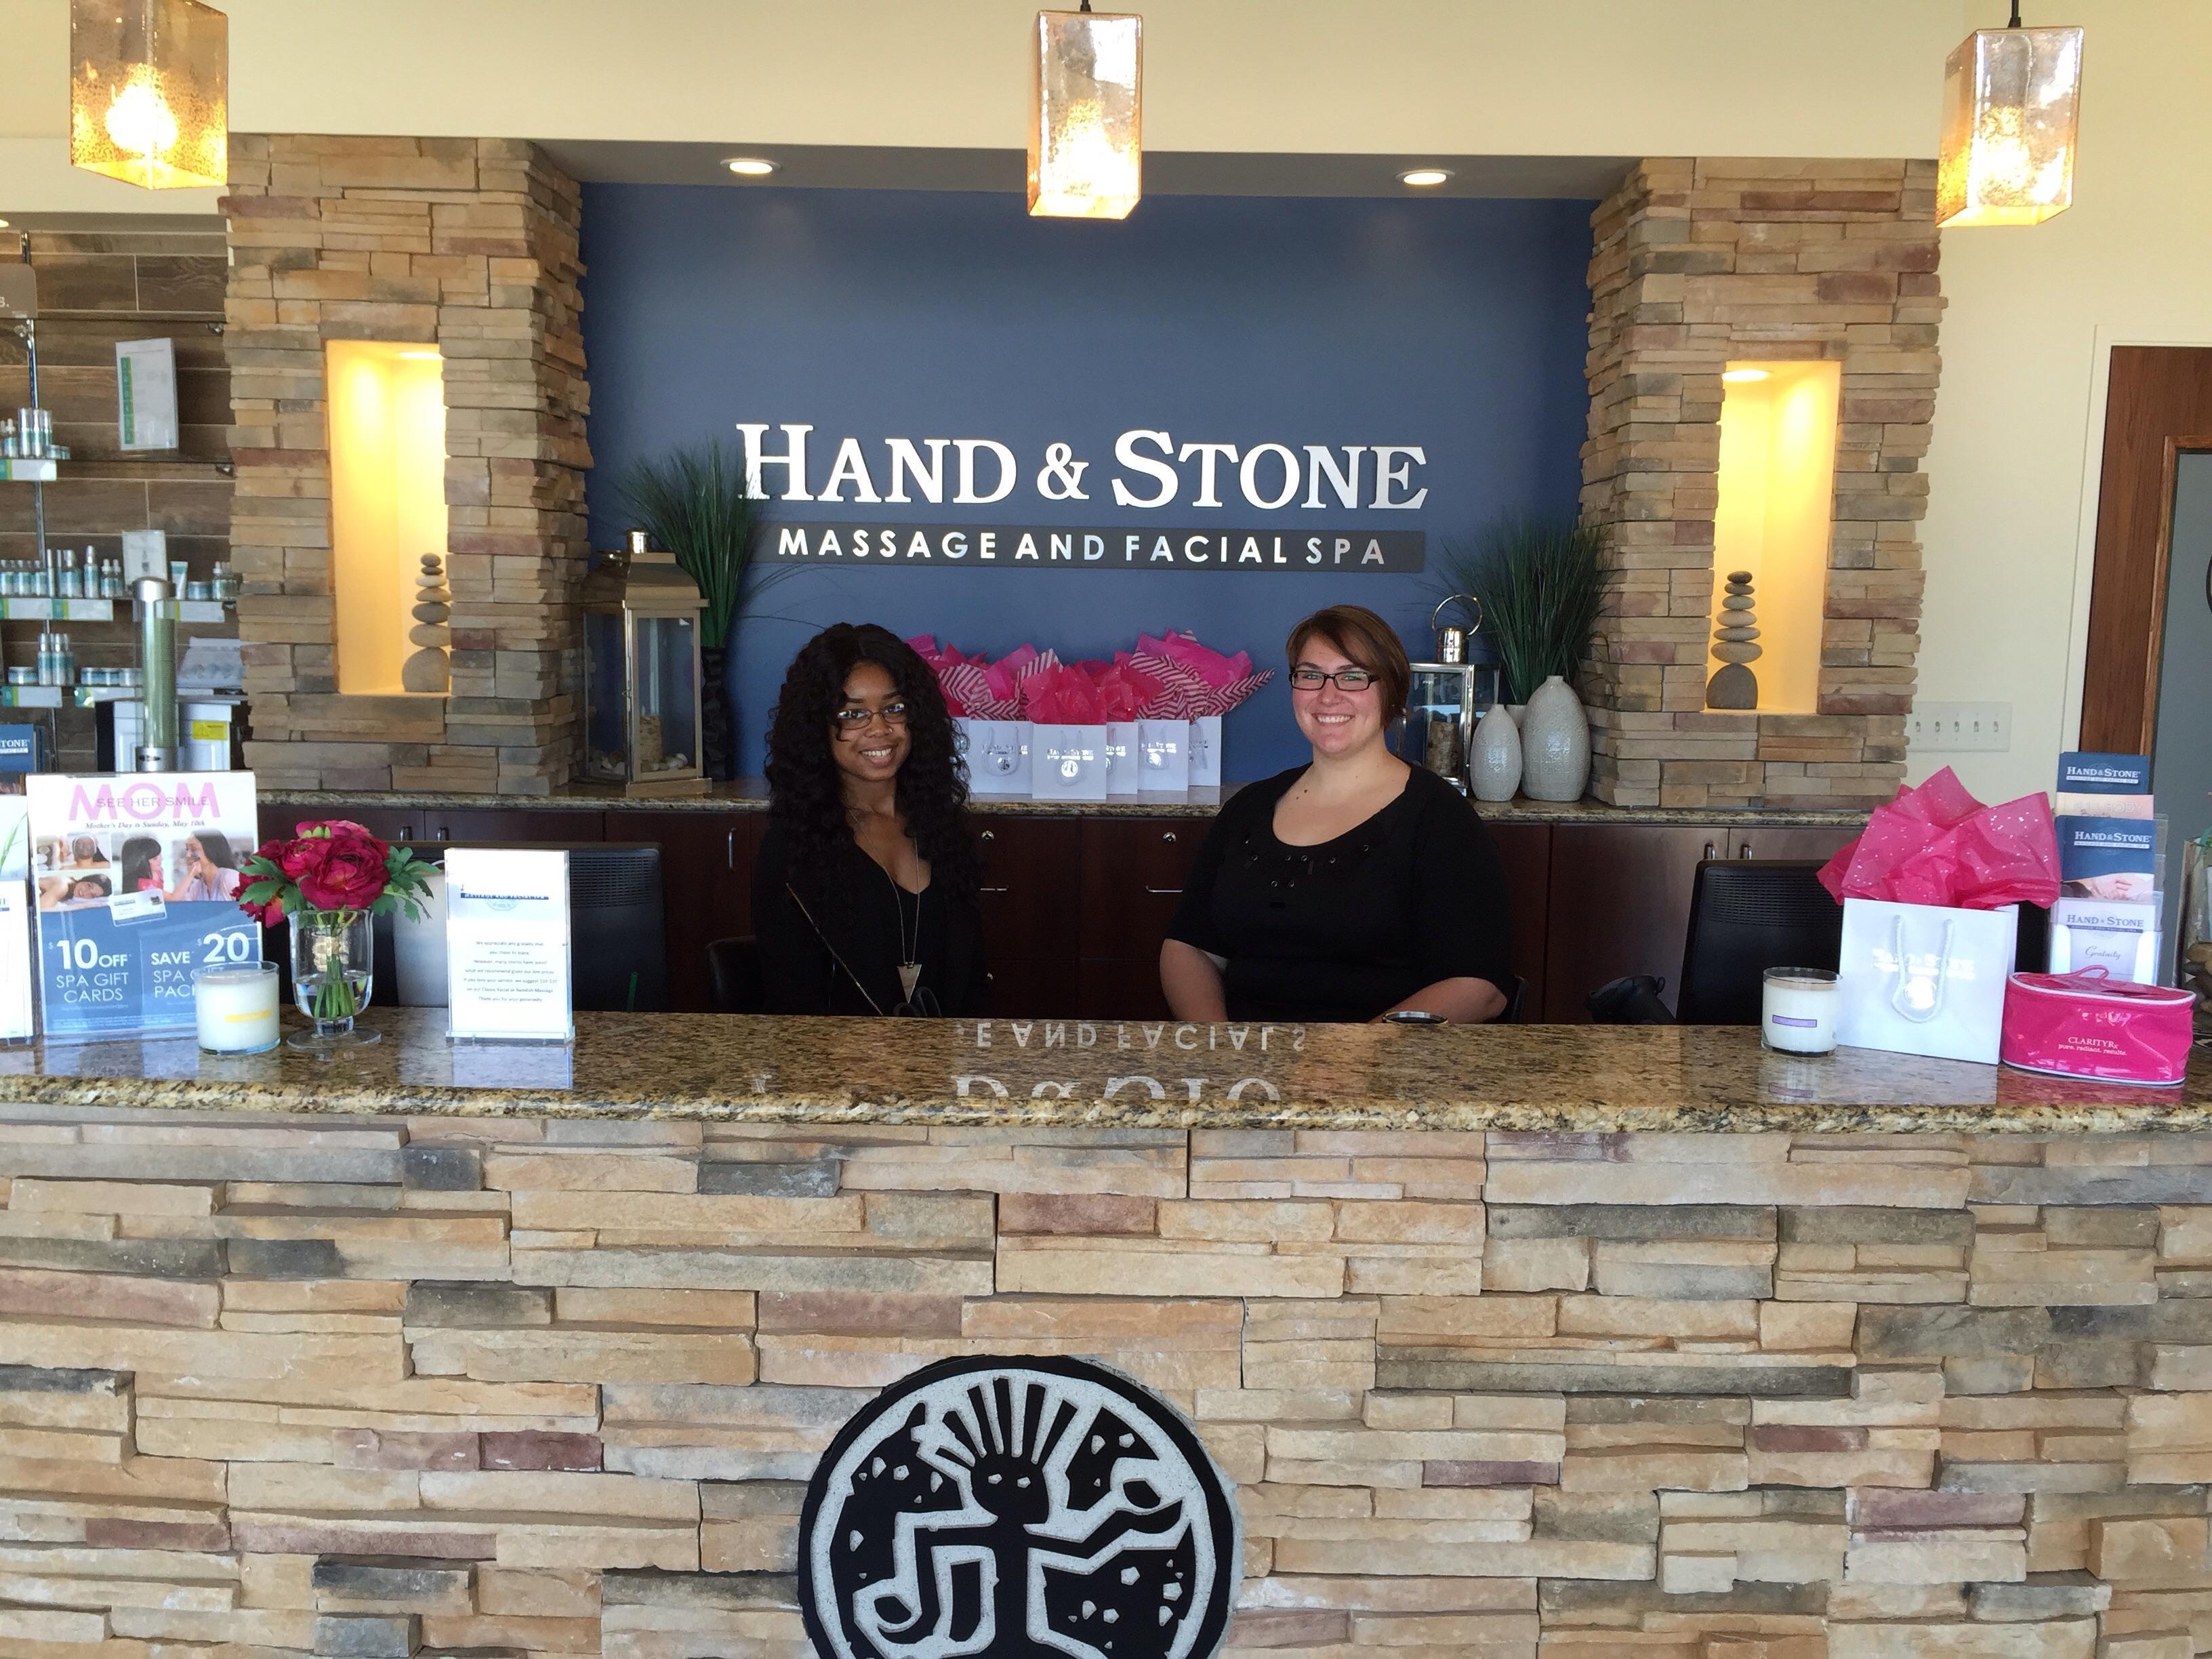 Hand & Stone Massage and Facial Spa - Plano, TX - Company ...